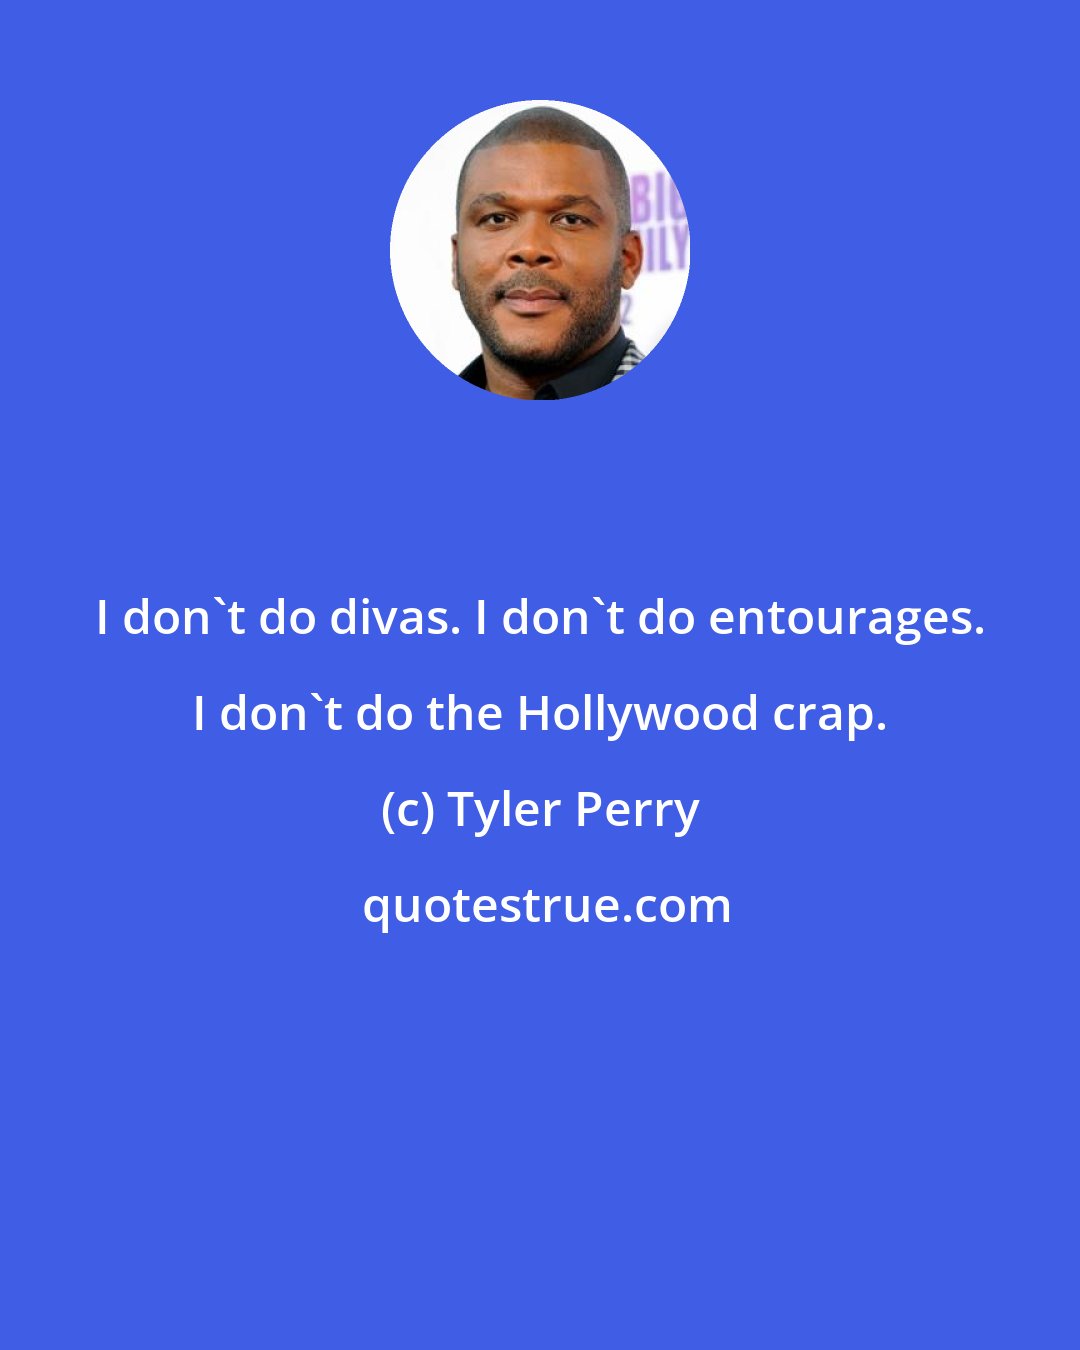 Tyler Perry: I don't do divas. I don't do entourages. I don't do the Hollywood crap.